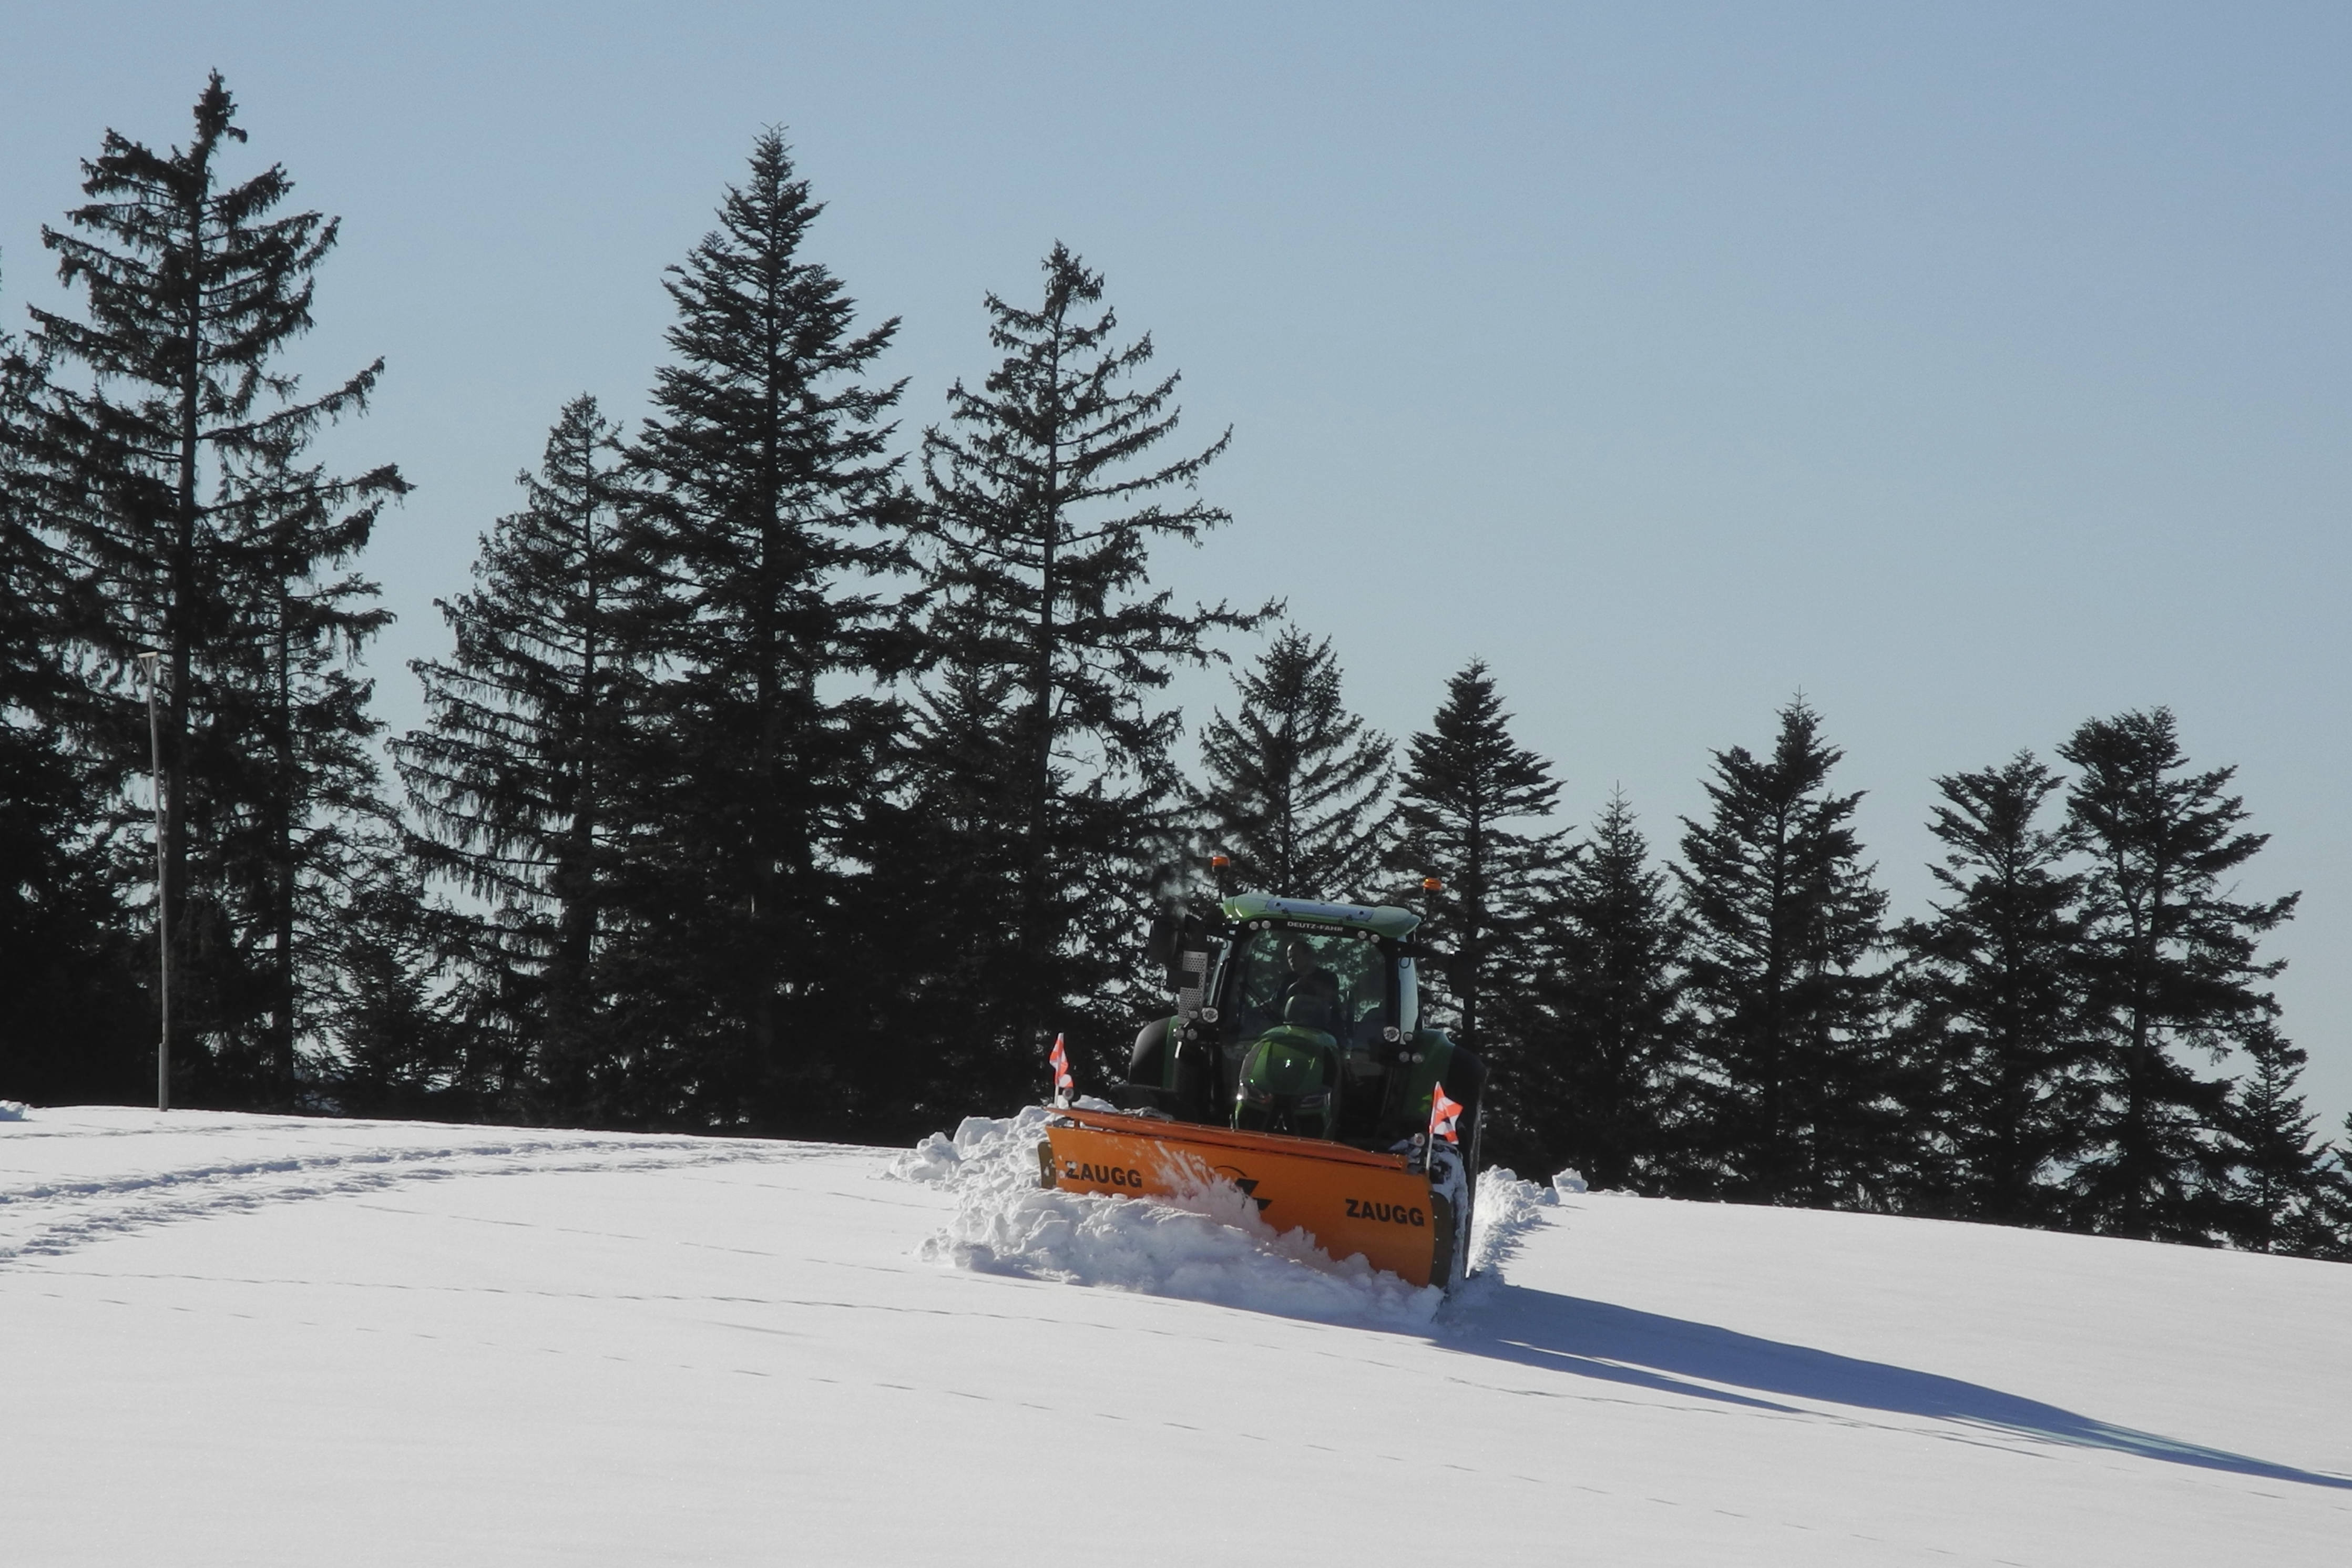 Snow plough G32